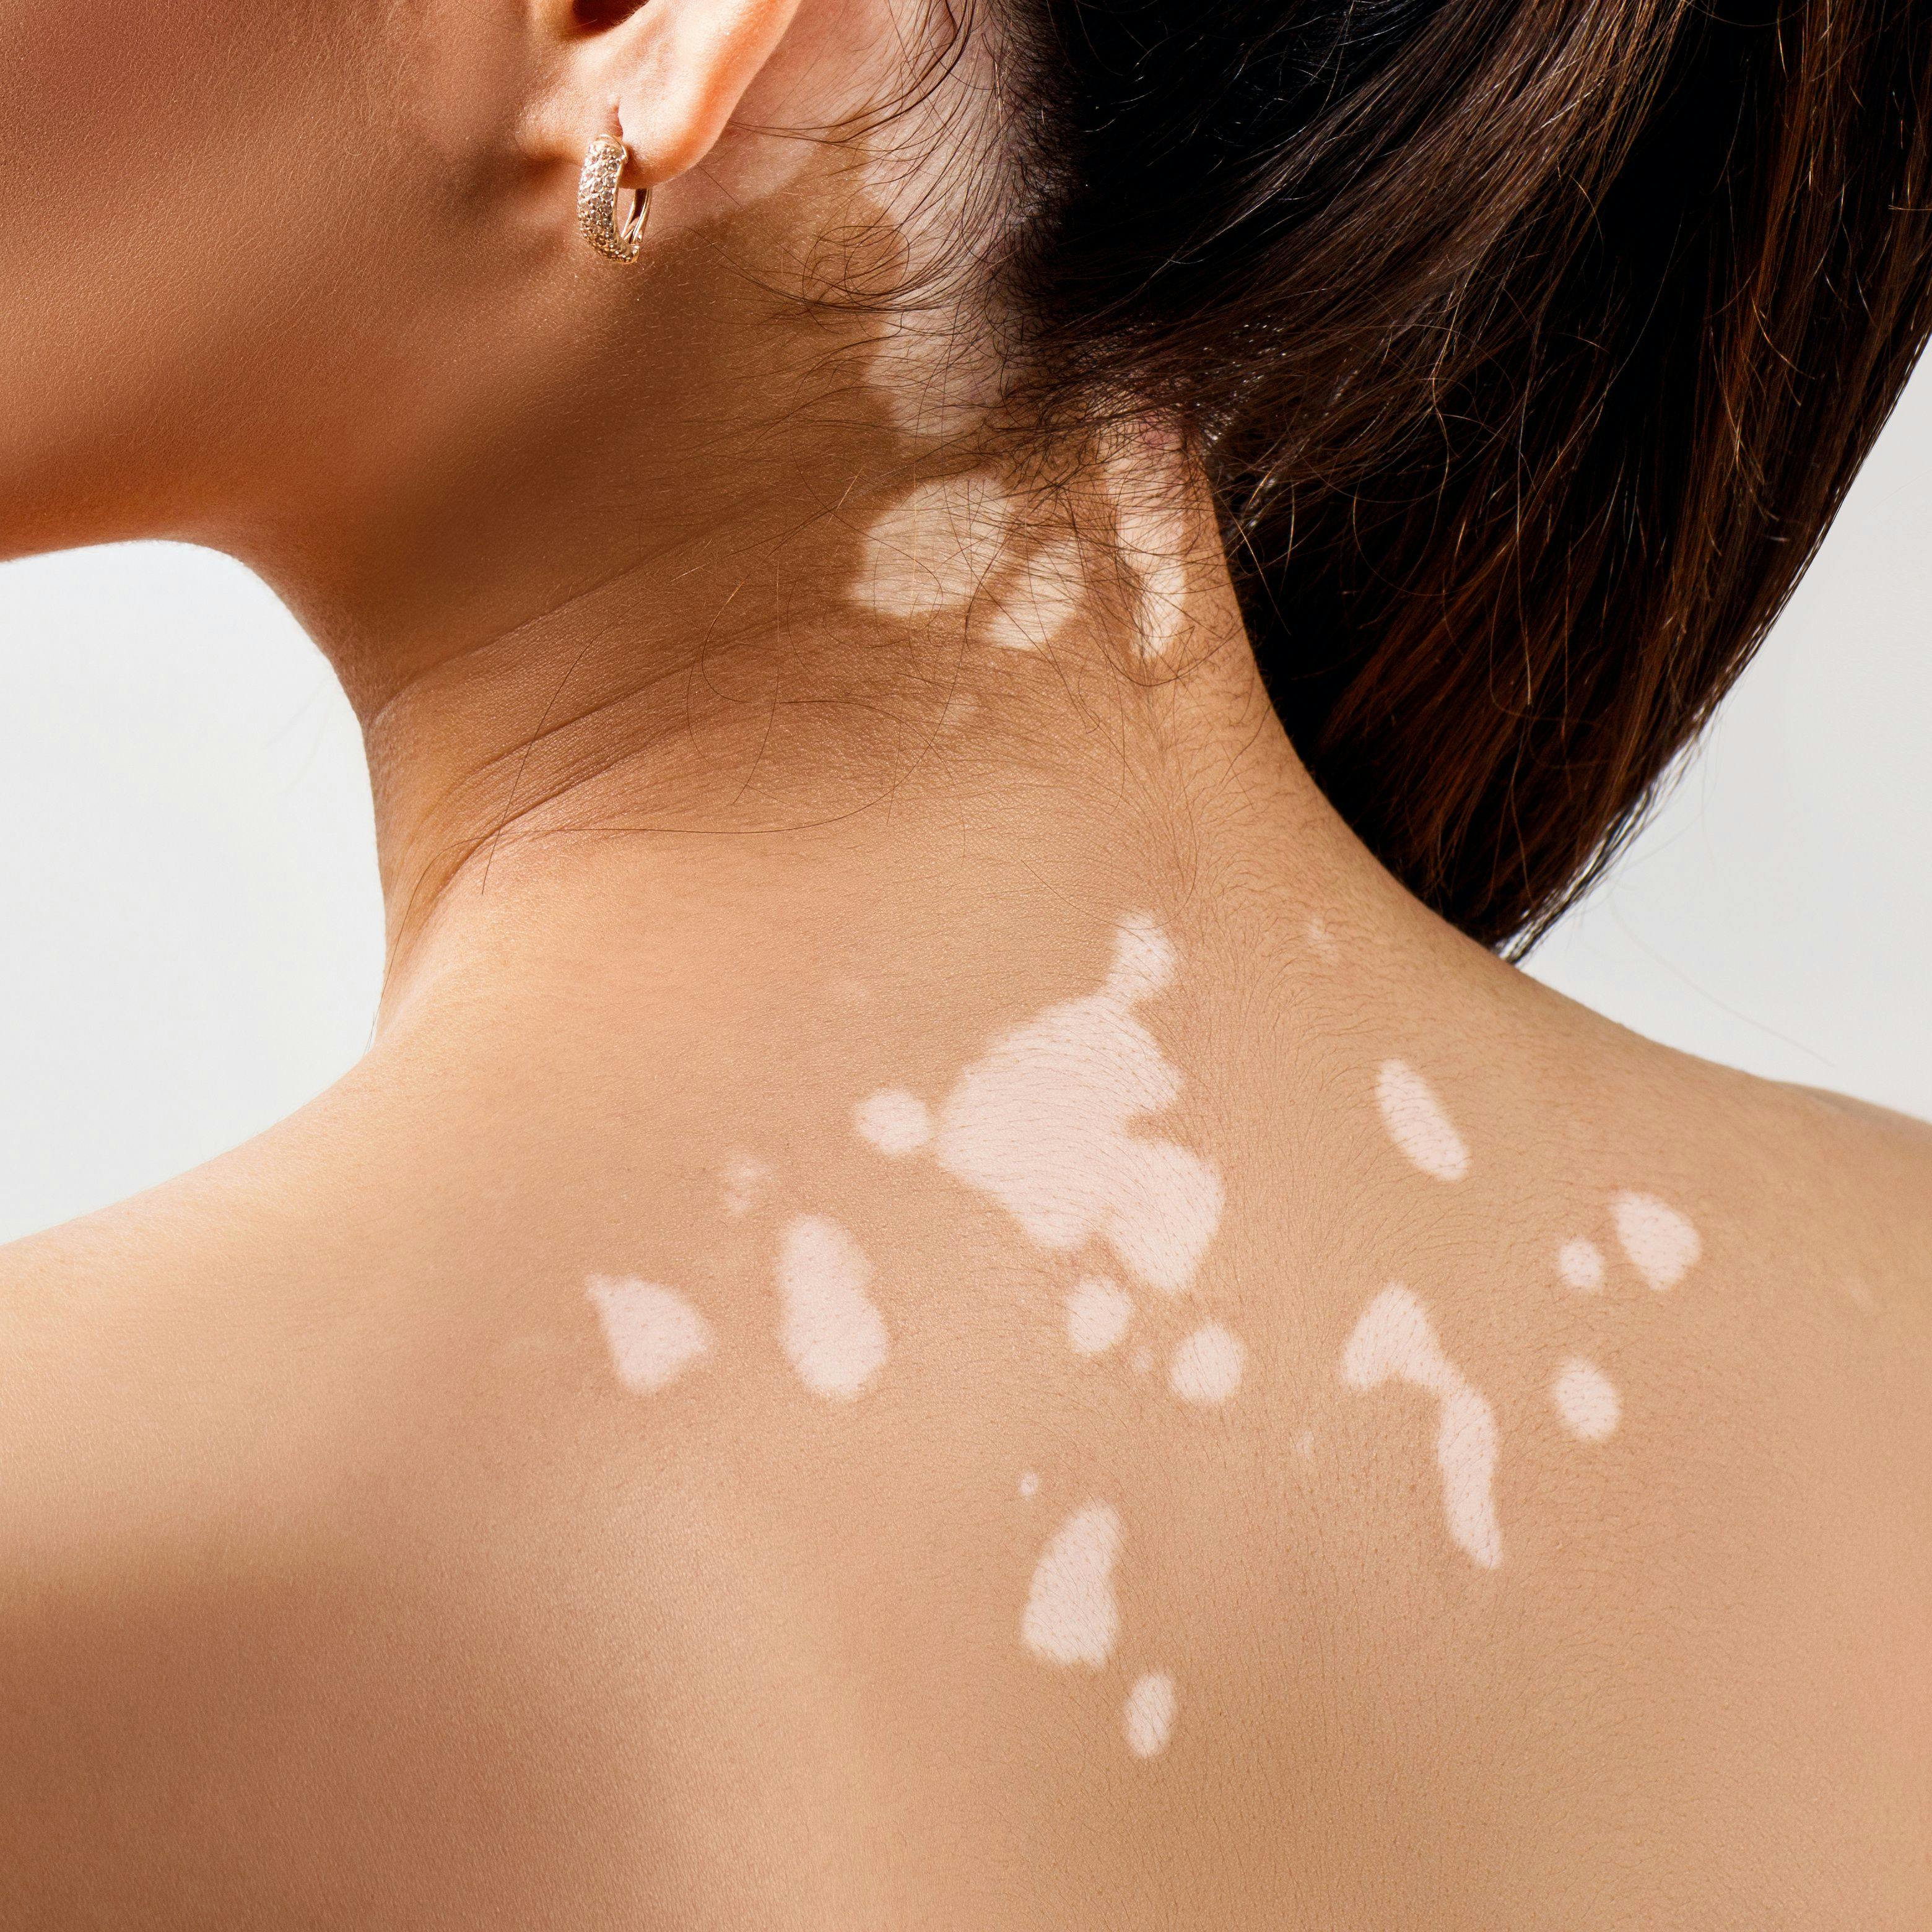 Woman with vitiligo on her back and neck | Image Credit: © Dmitrii Kotin - stock.adobe.com